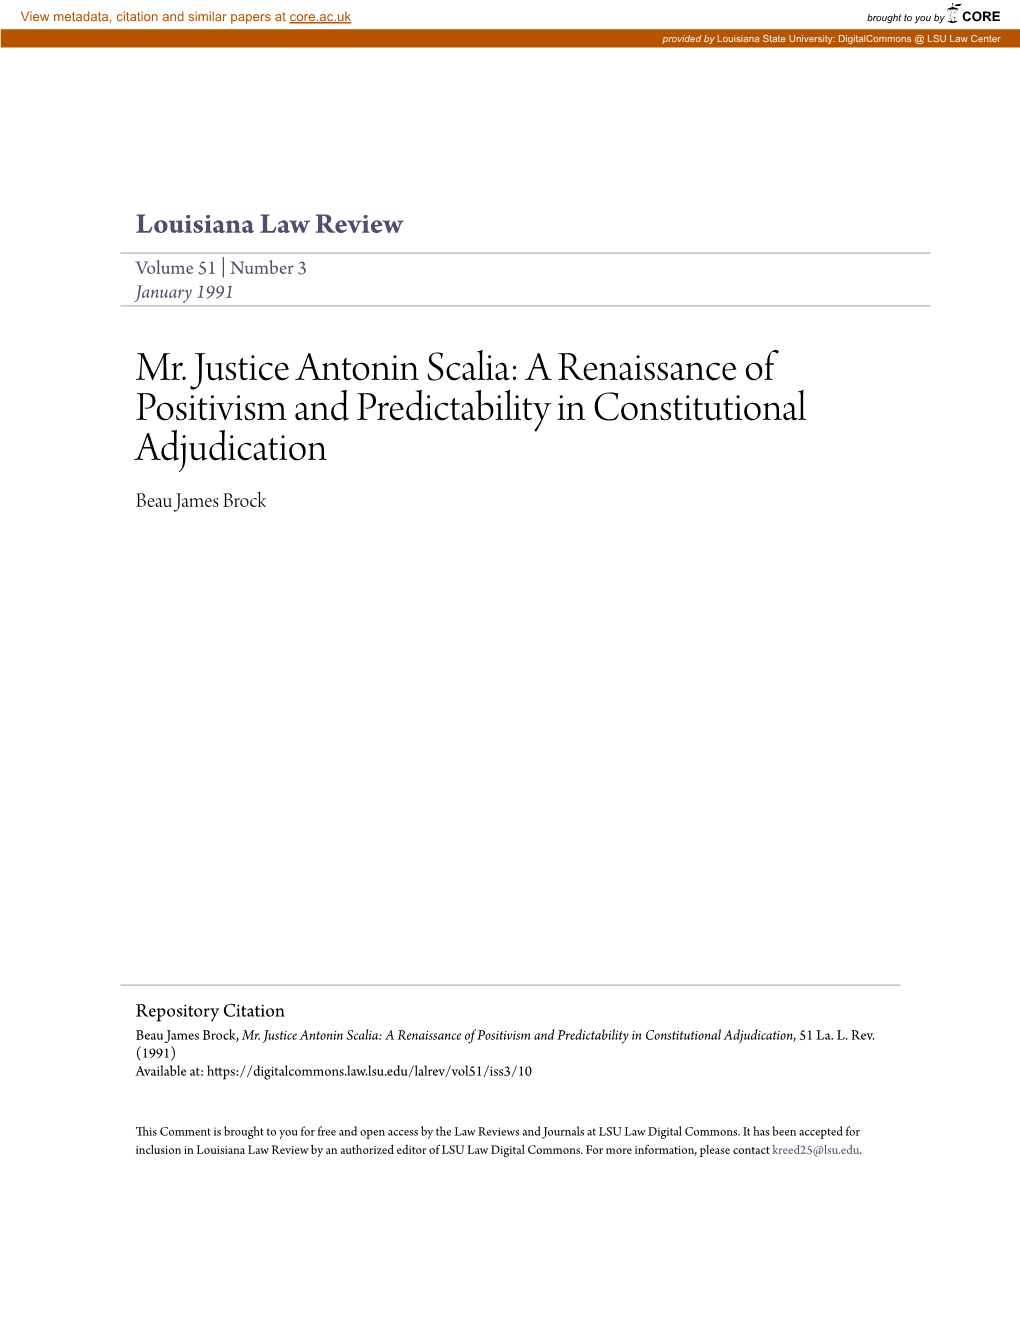 Mr. Justice Antonin Scalia: a Renaissance of Positivism and Predictability in Constitutional Adjudication Beau James Brock